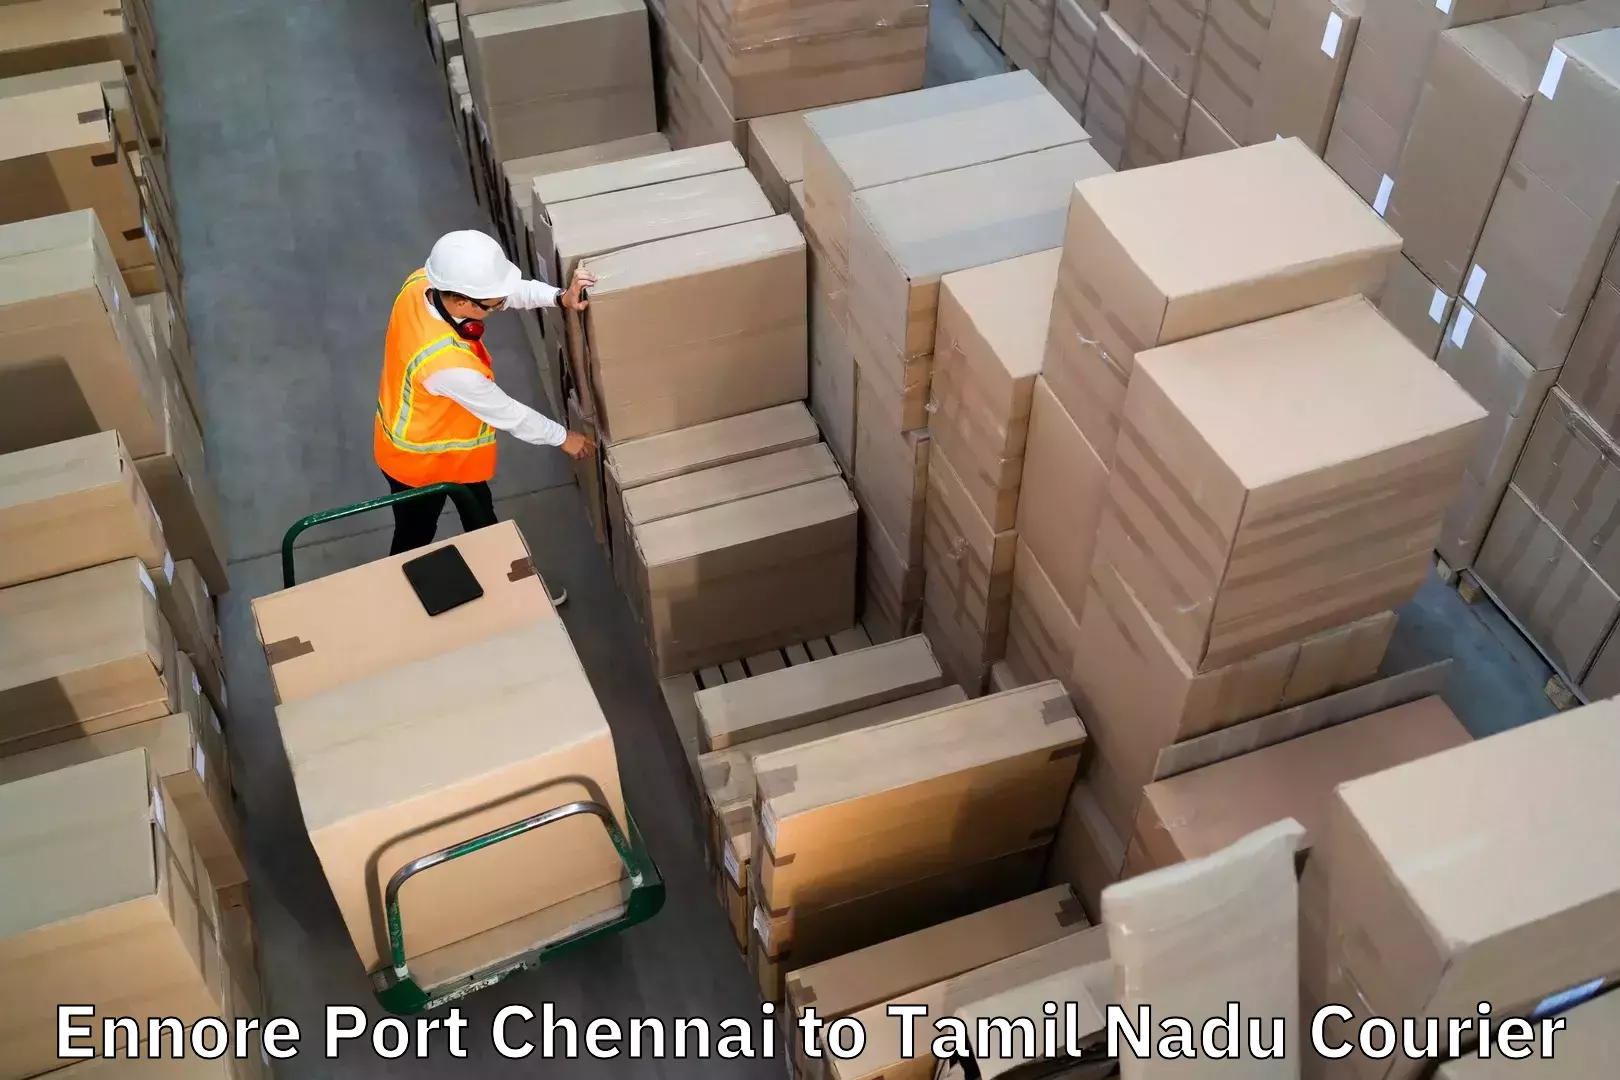 Luggage delivery network Ennore Port Chennai to Gudiyattam